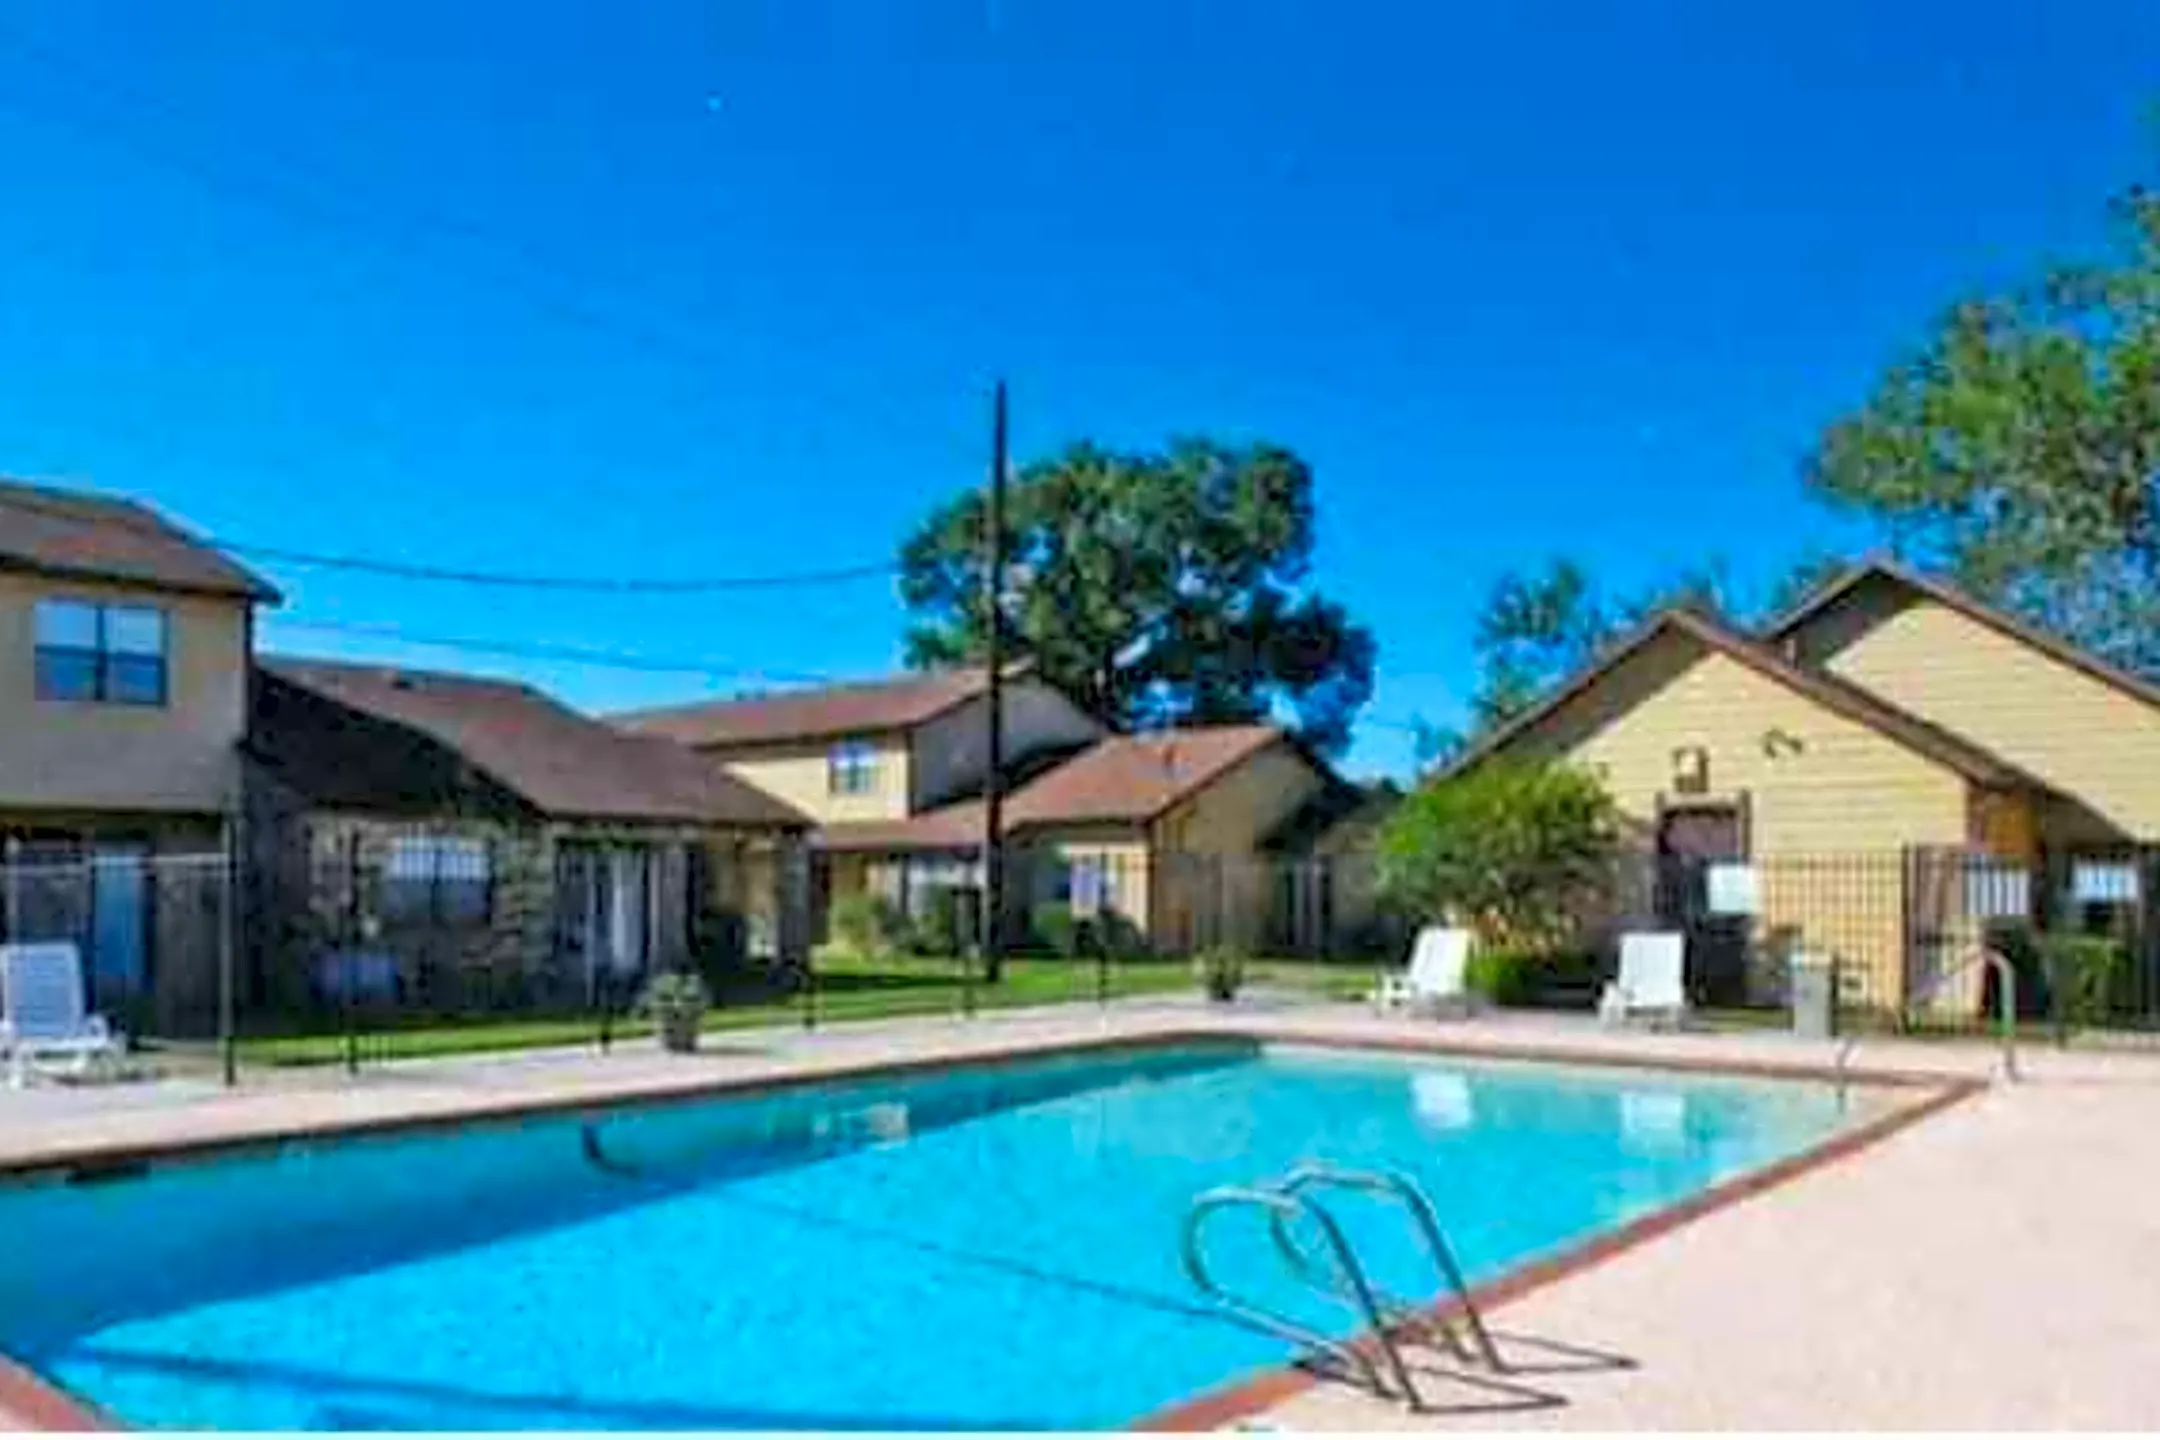 Pool - Regency Place Apartments - Beaumont, TX